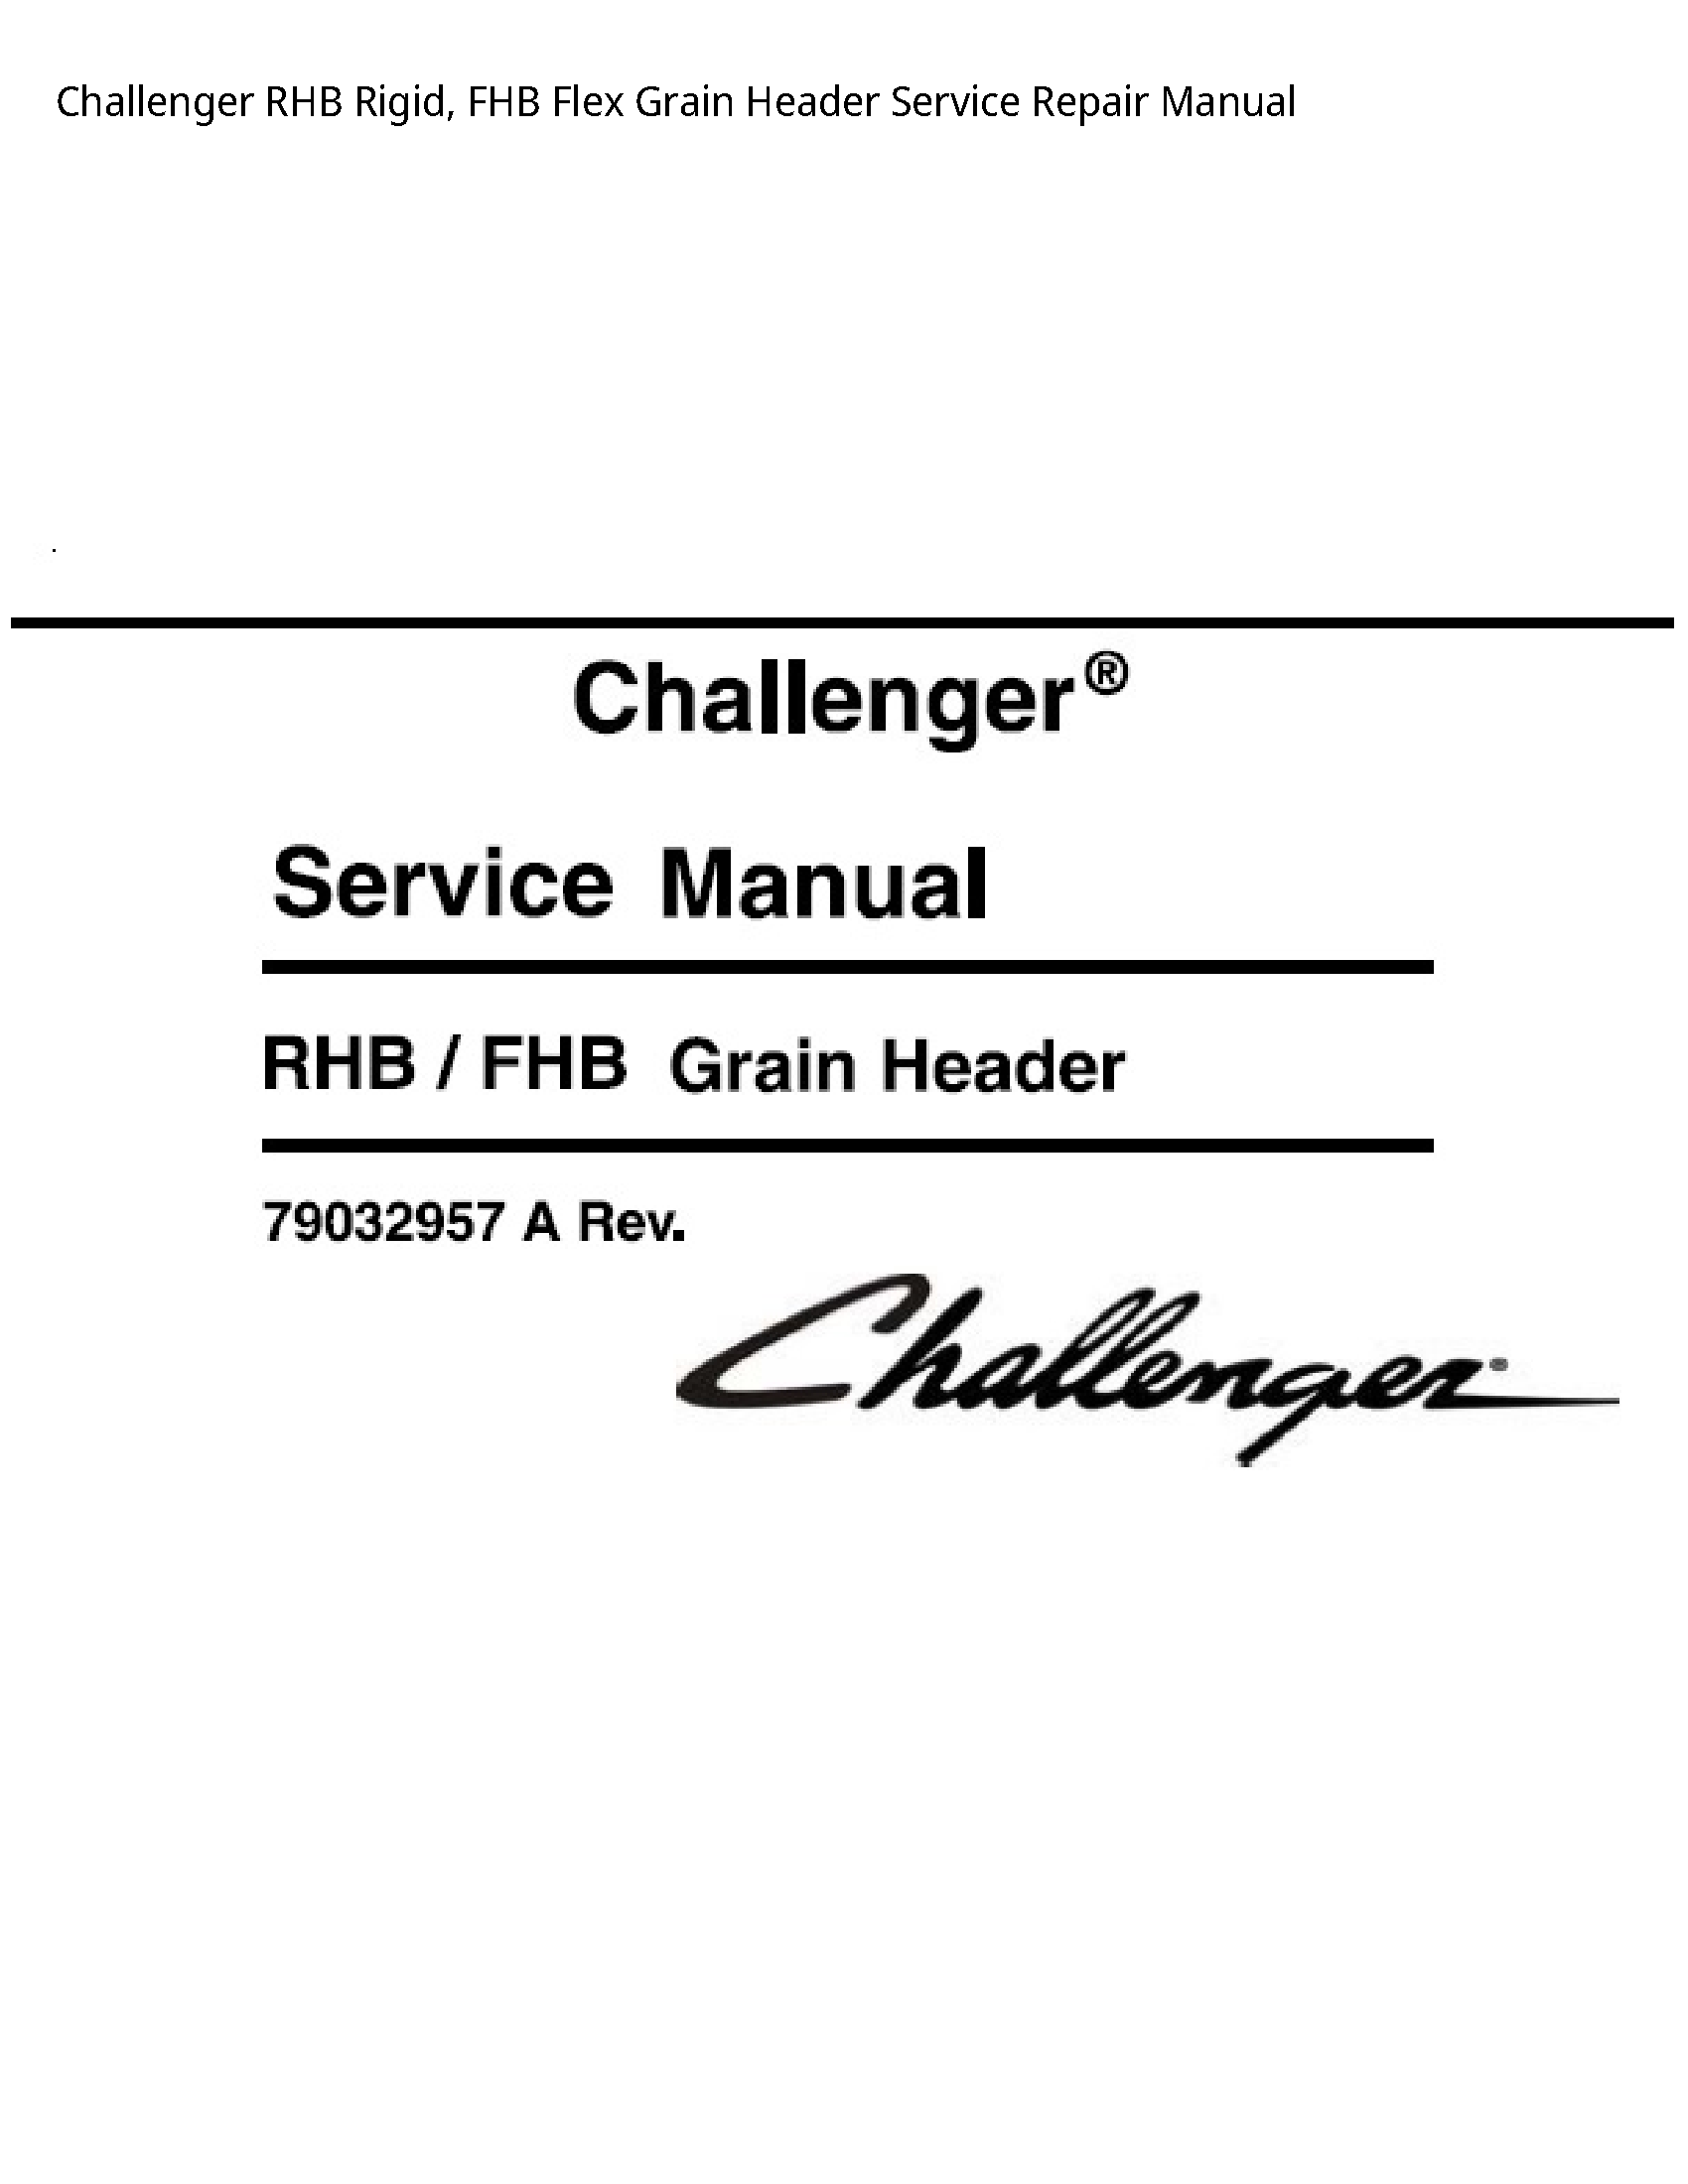 Challenger RHB Rigid manual